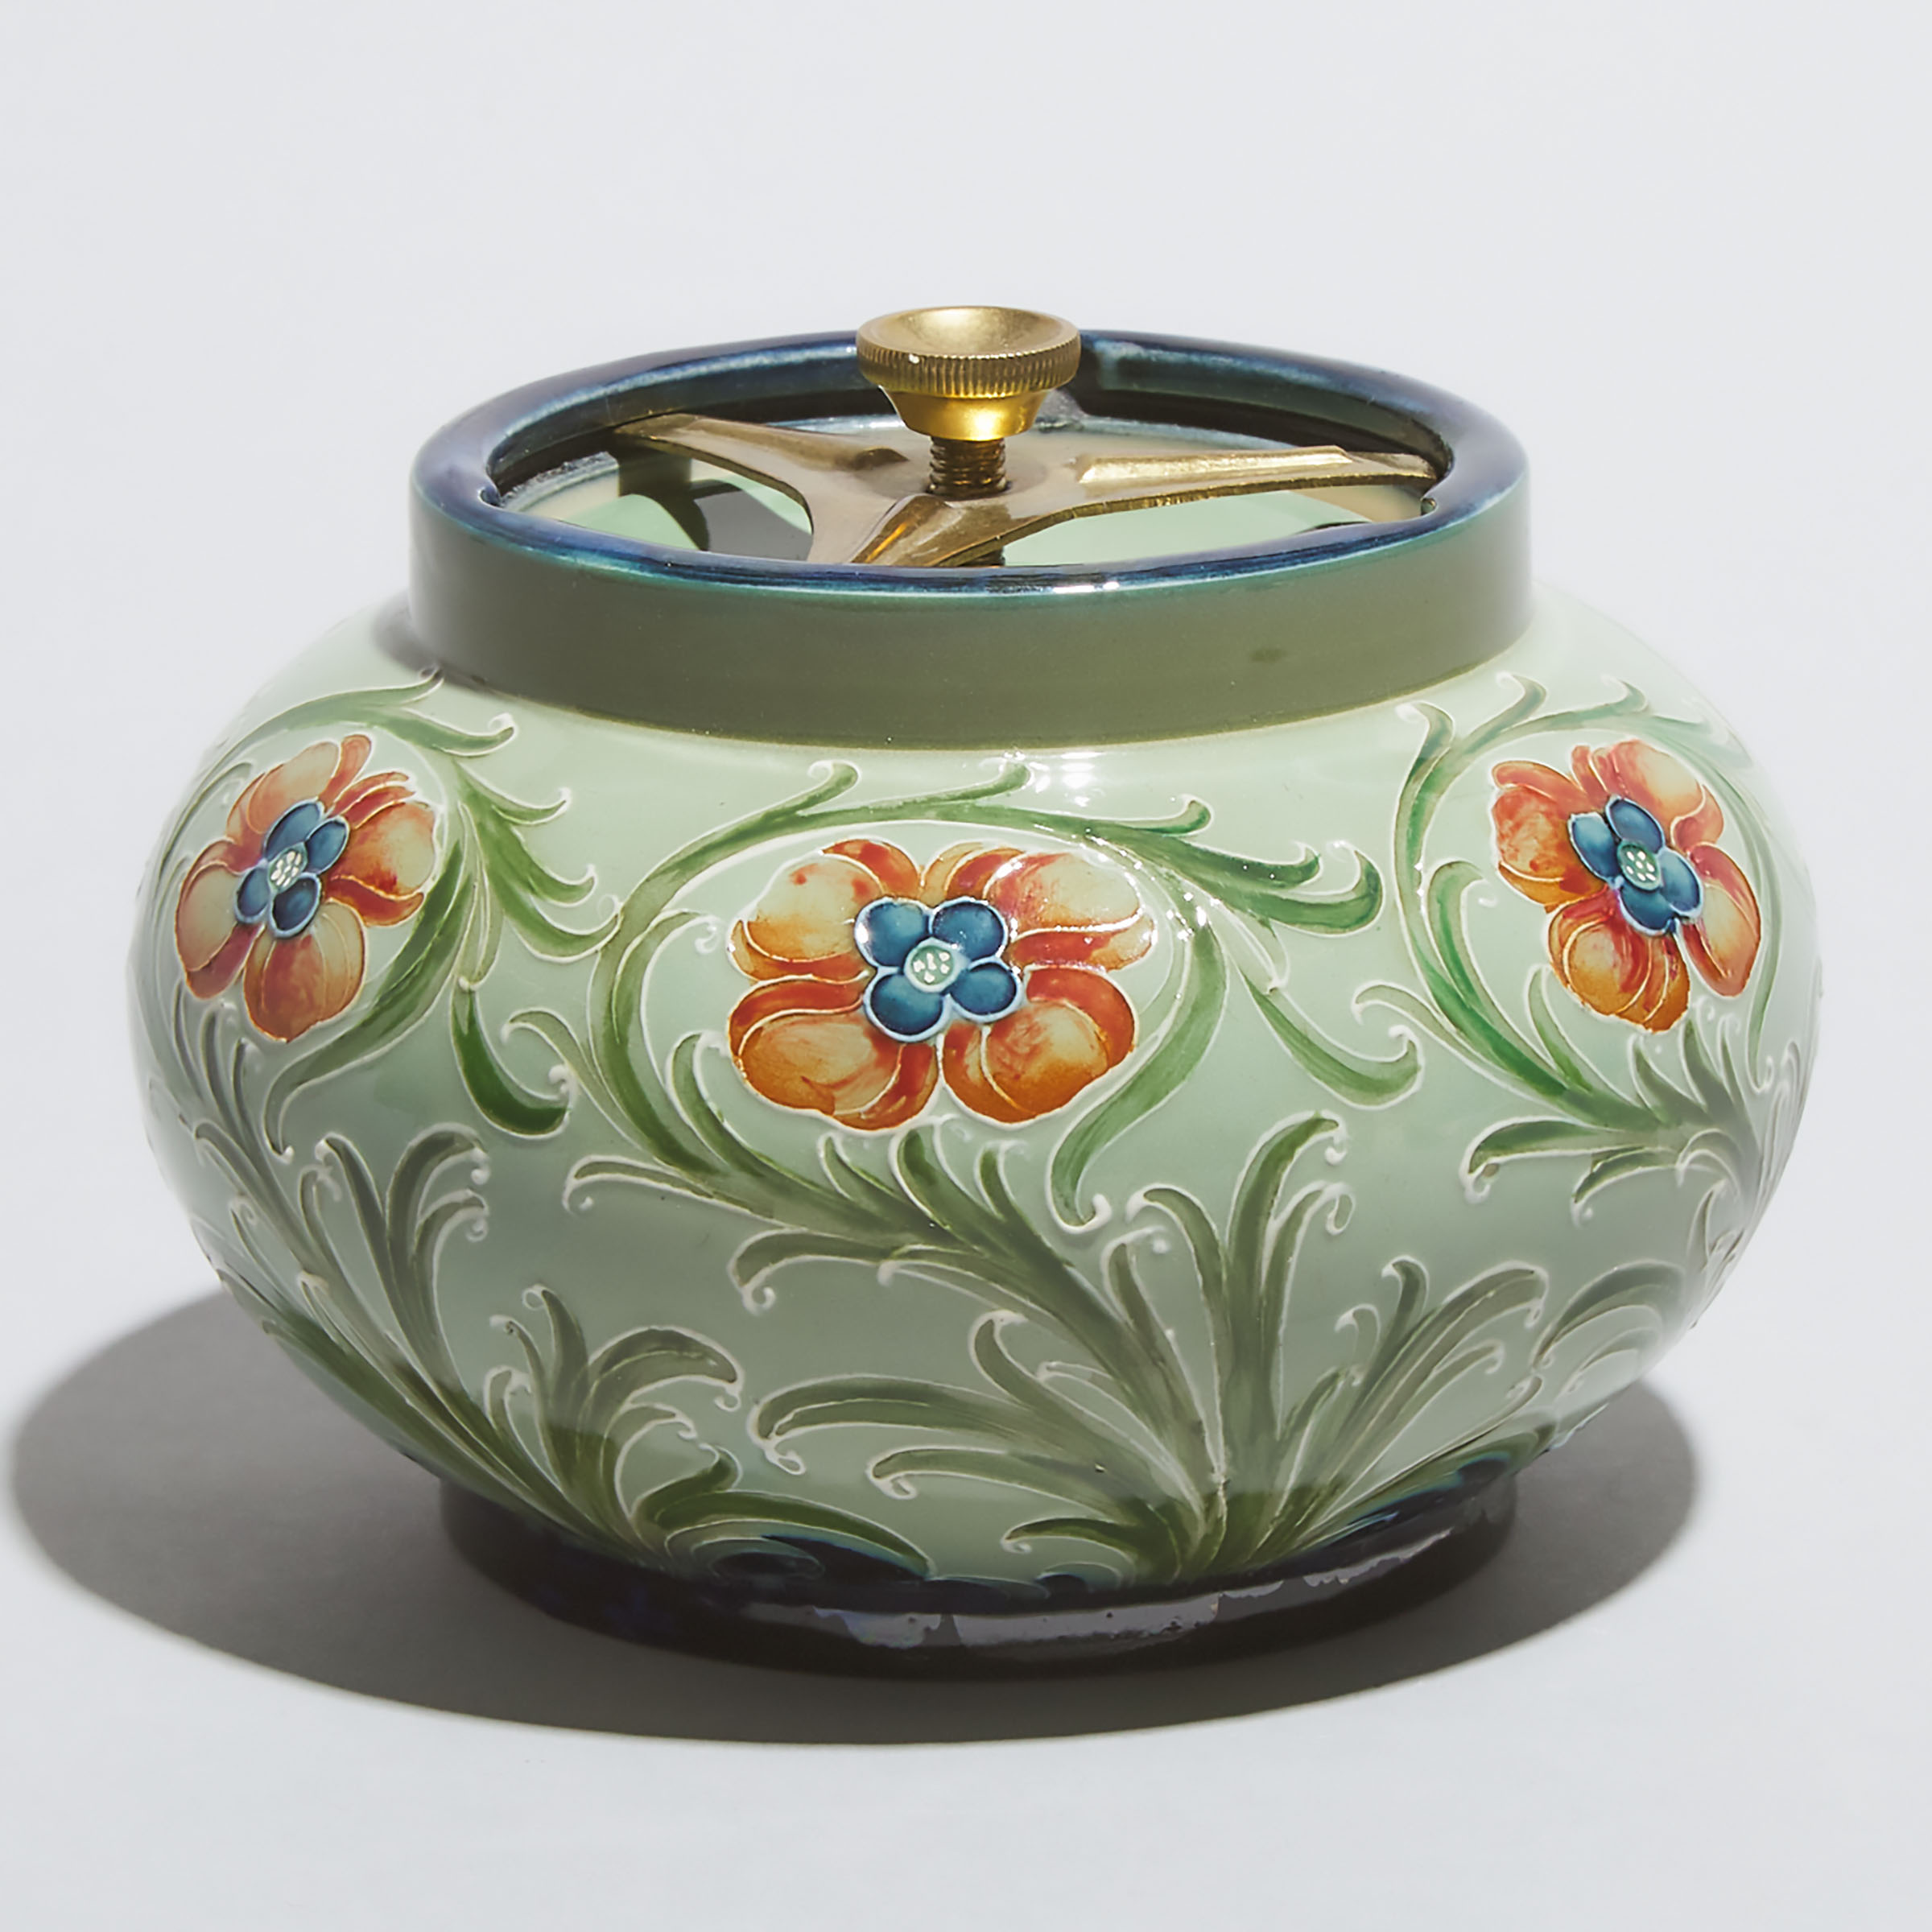 Macintyre Moorcroft Poppy Tobacco Jar, c.1910